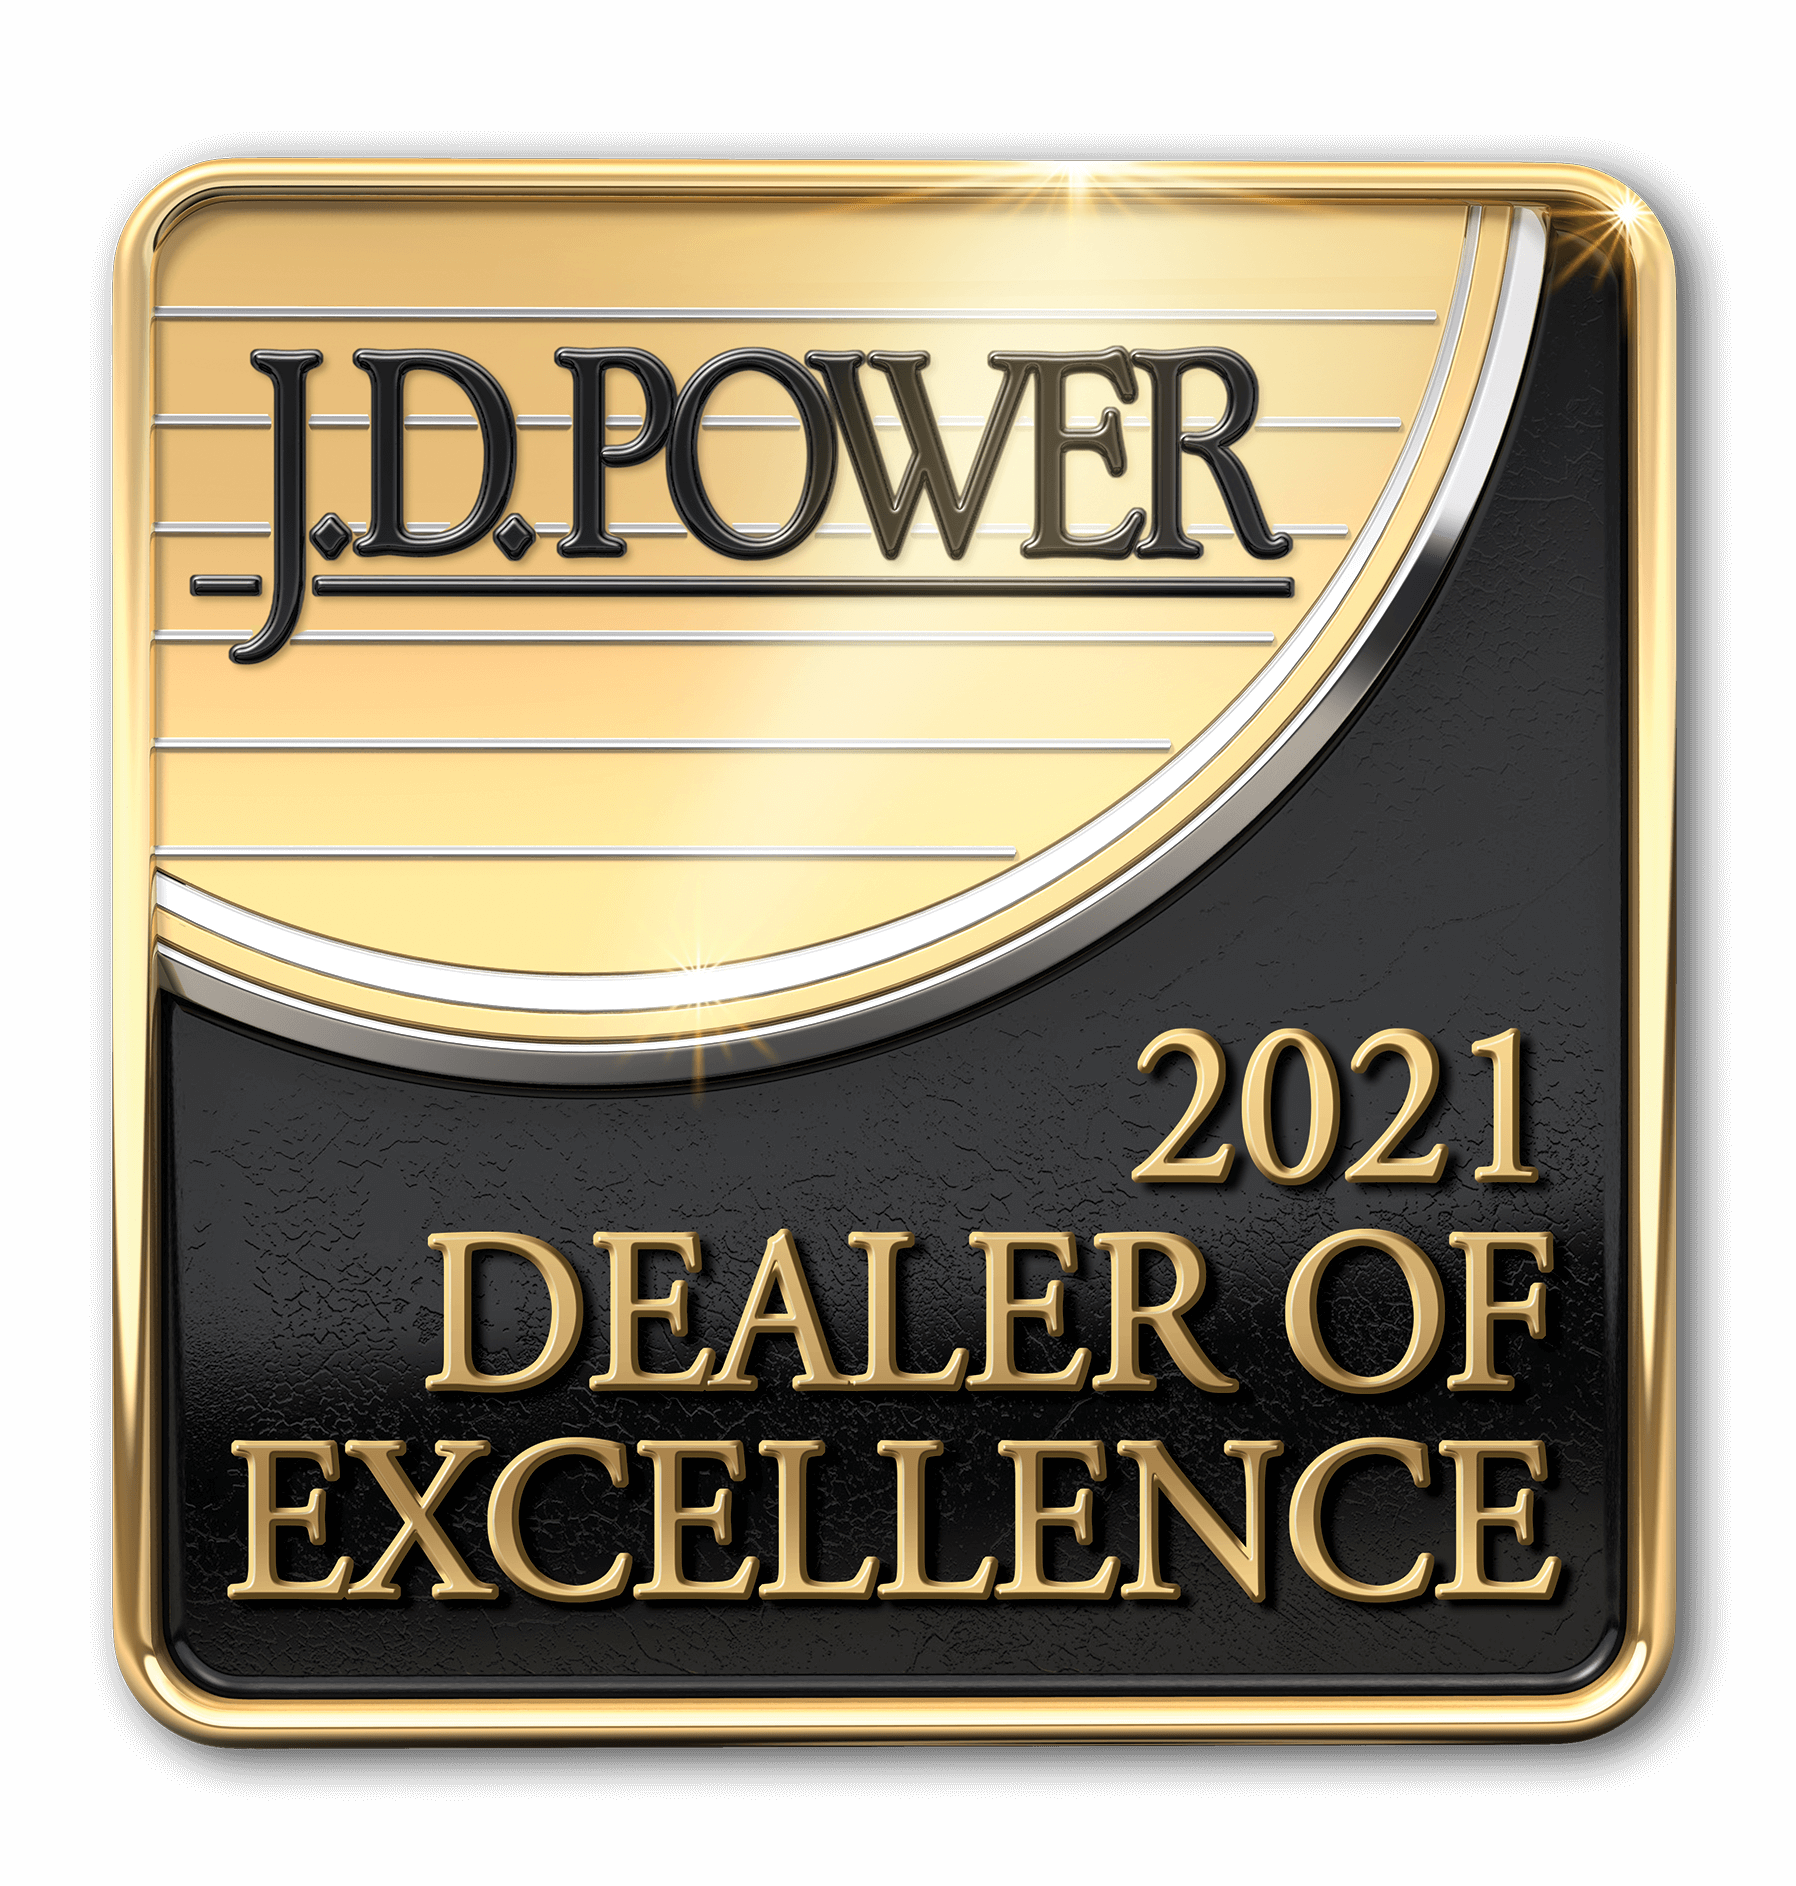 J.D. Power Dealer of Excellence Logo